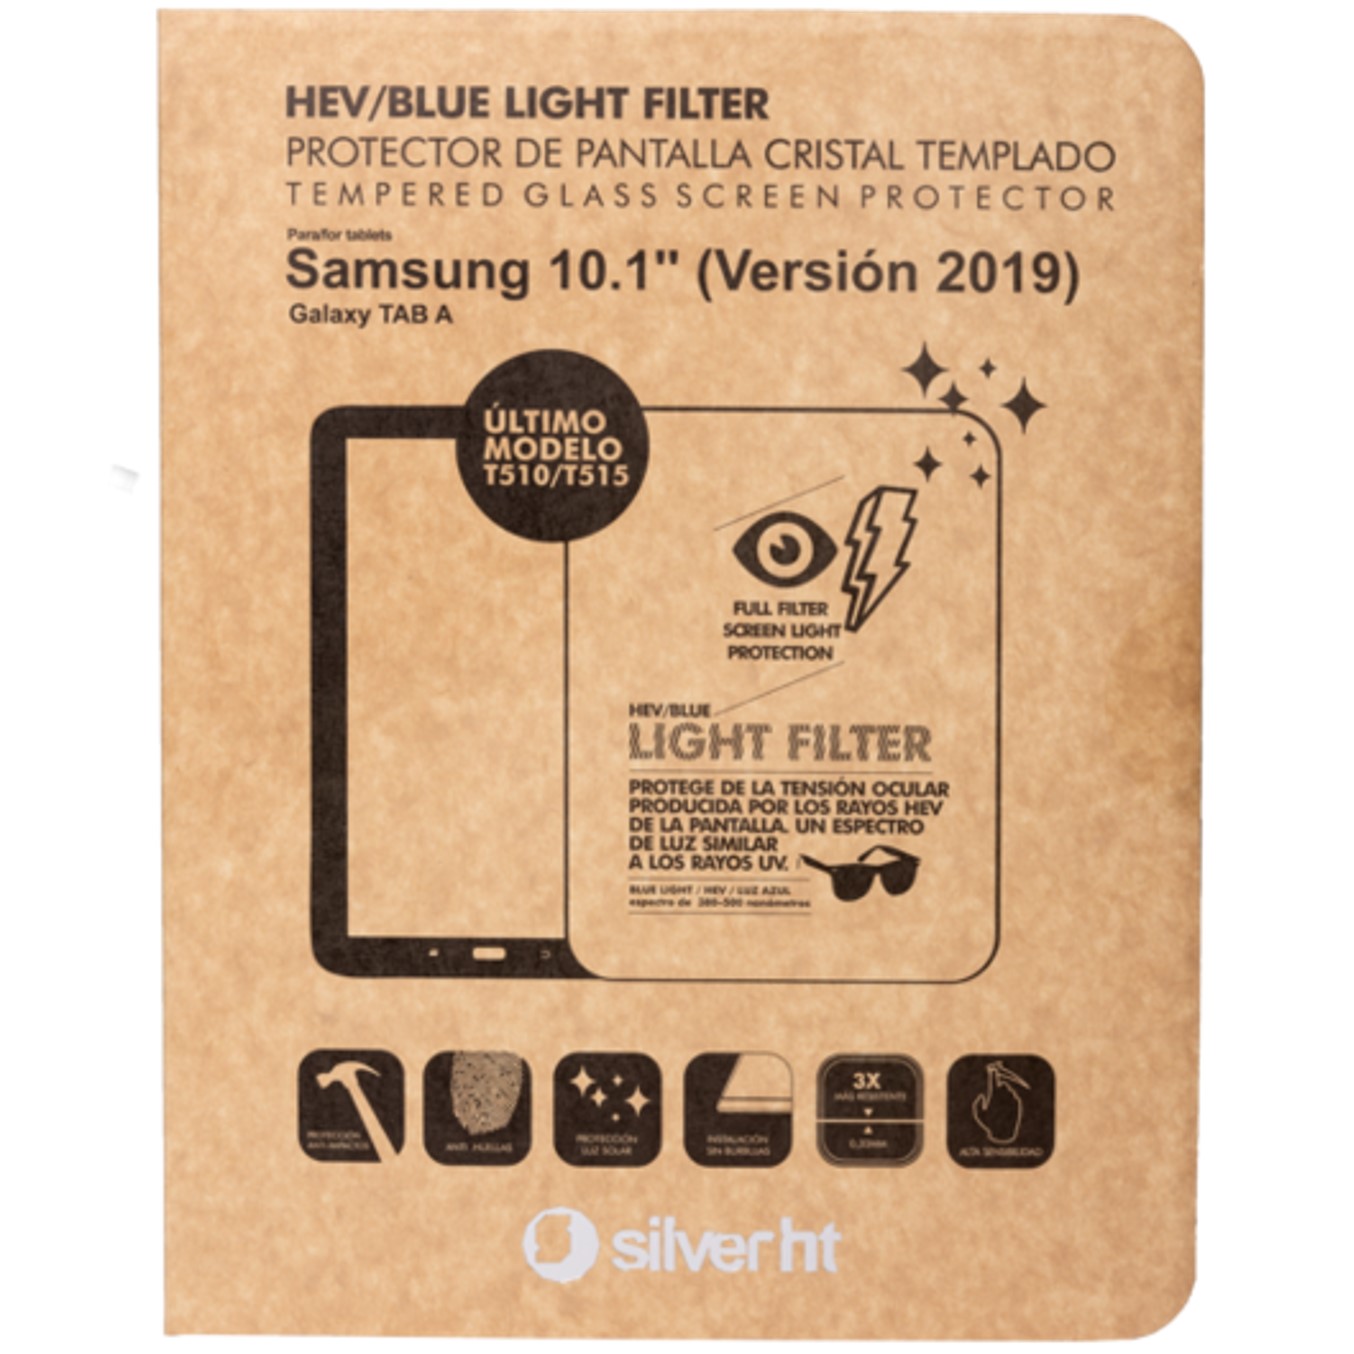 Protector de pantalla silver ht para samsung tab a 2019 10.1pulgadas (t510 - t515) cristal templado blue light